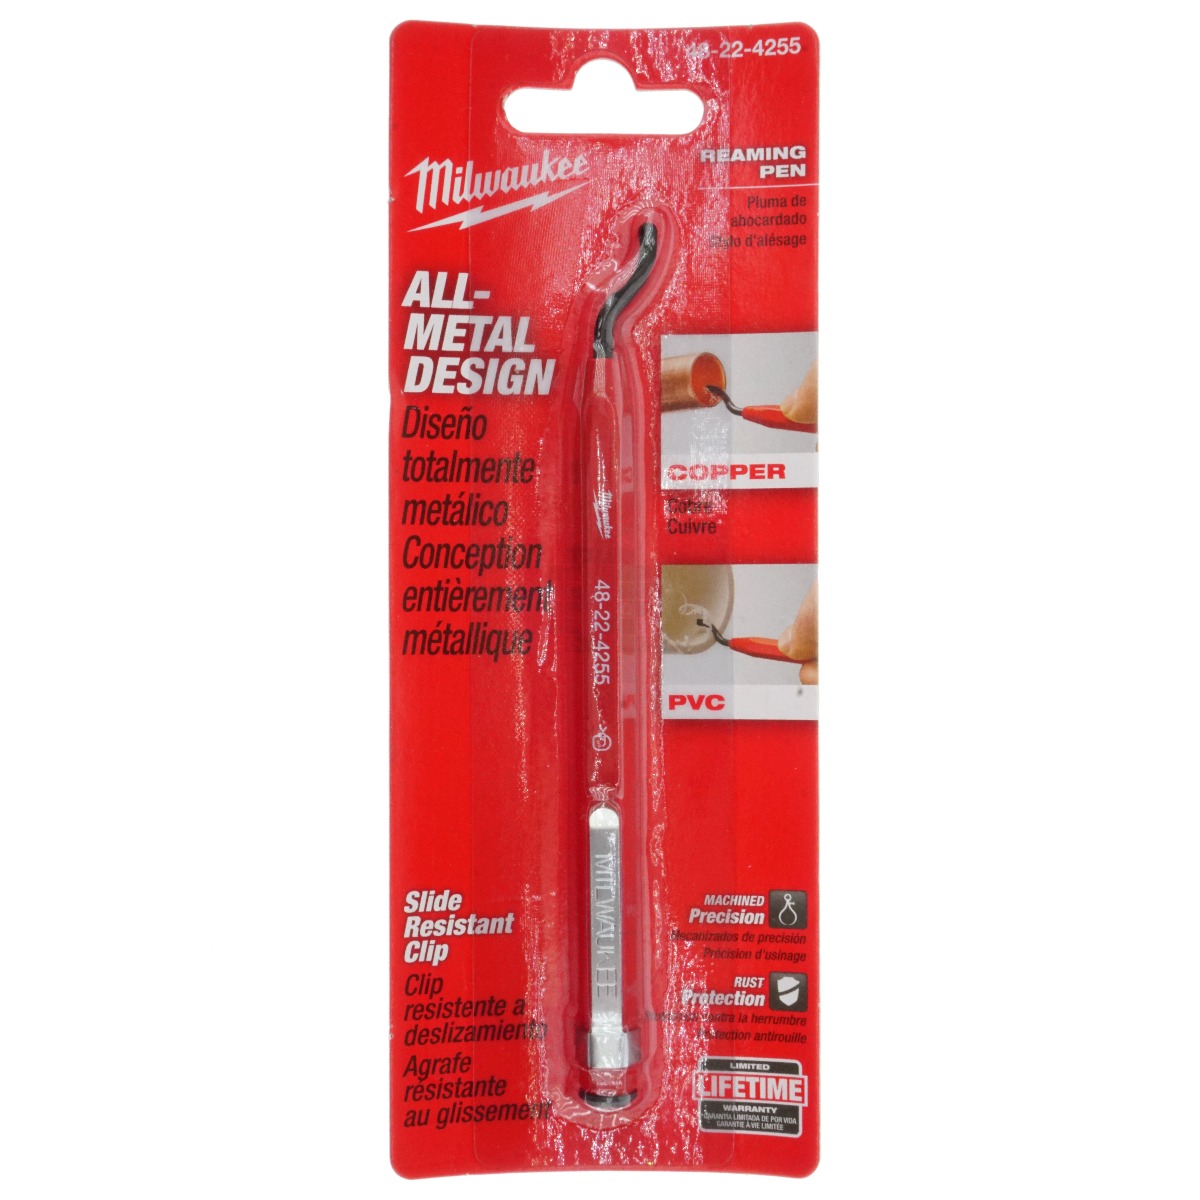 Milwaukee 48-22-4255 All-Metal Reaming/Deburring Pen